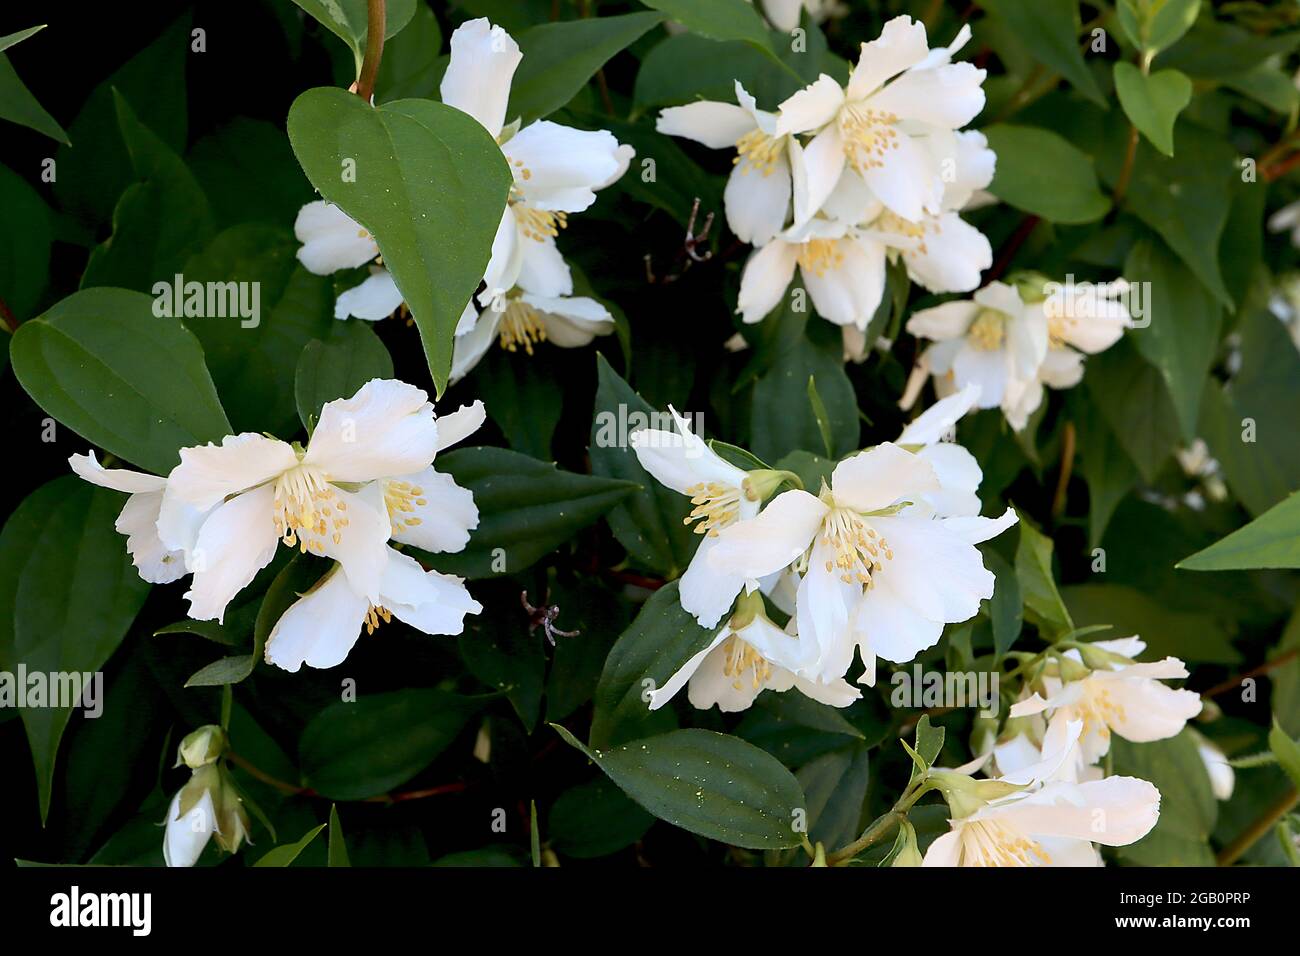 Philadelphus lemoinei mock orange lemoinei – white flowers with fringed petals,  June, England, UK Stock Photo